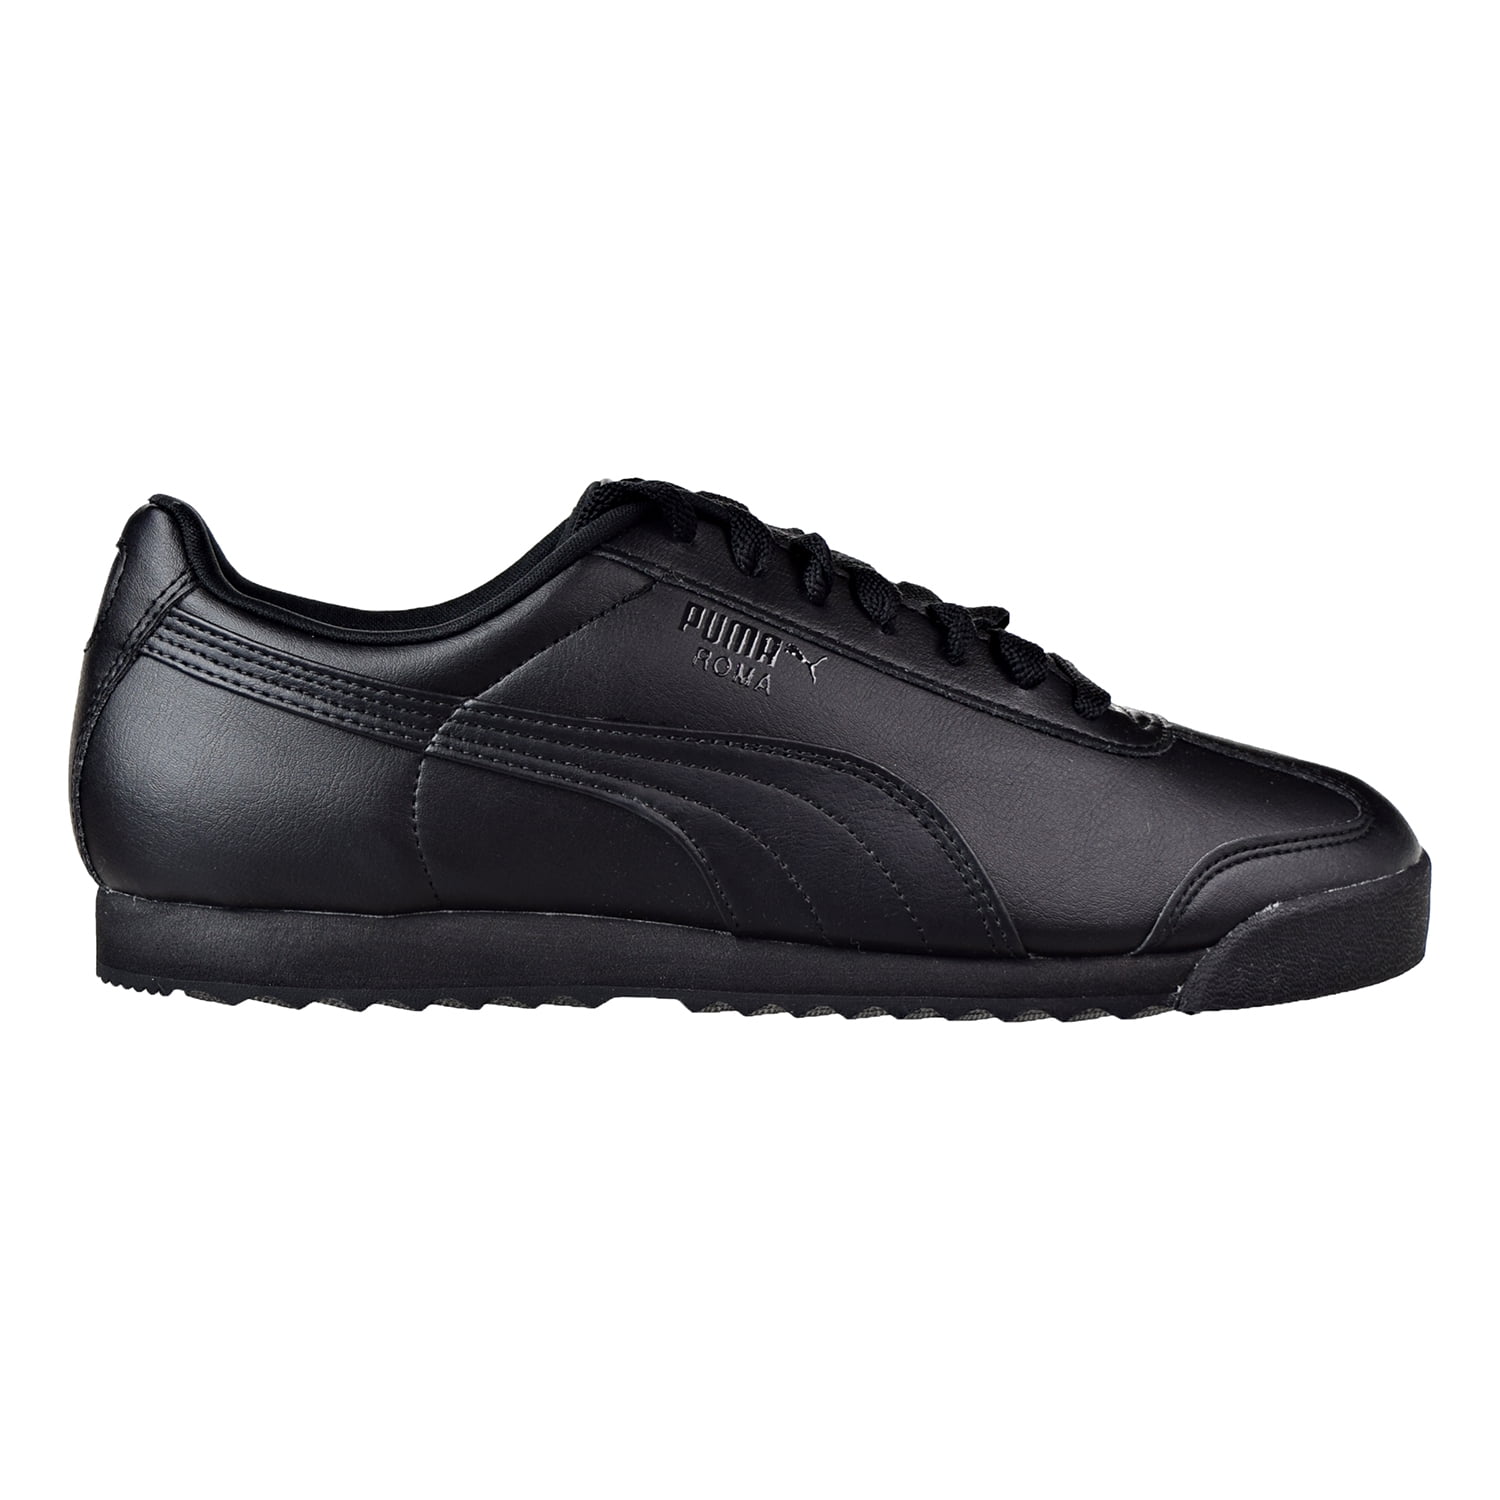 Converge Compliance to ore Puma Roma Basic Men's Shoes Puma Black/Puma Black 353572-17 - Walmart.com